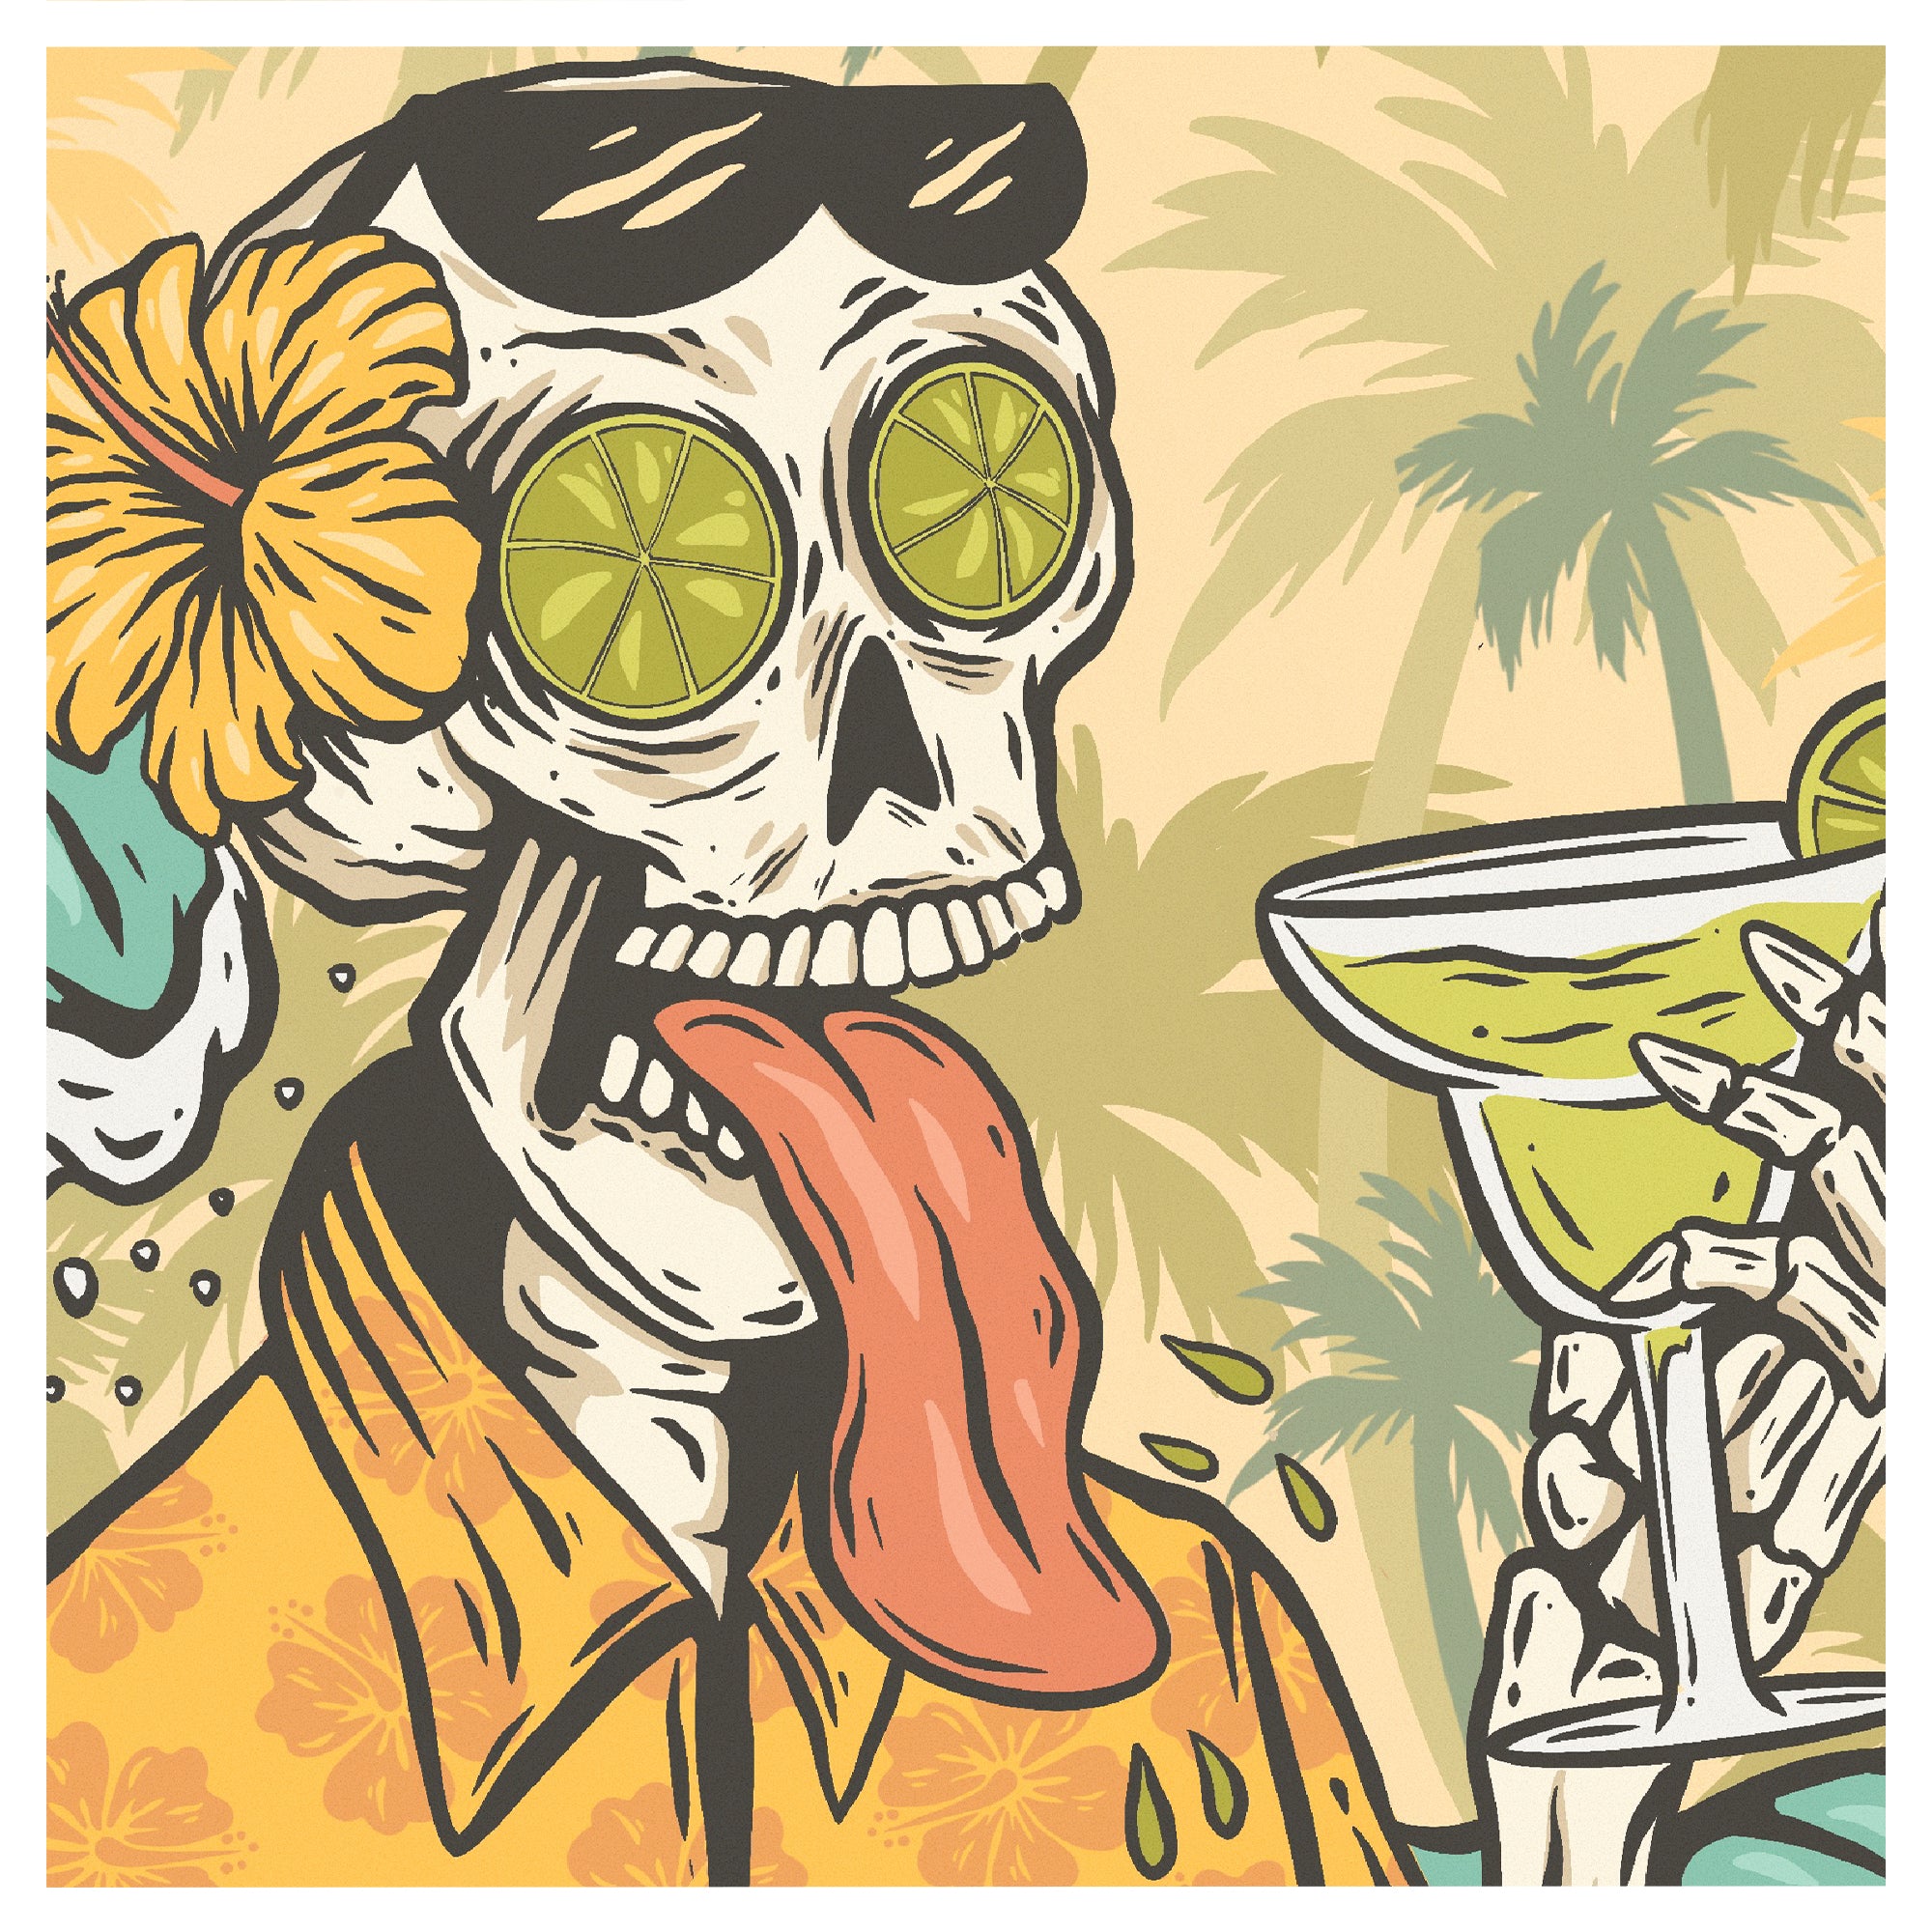 A skeleton man drinking margarita by Hawaii artist Laihha Organna